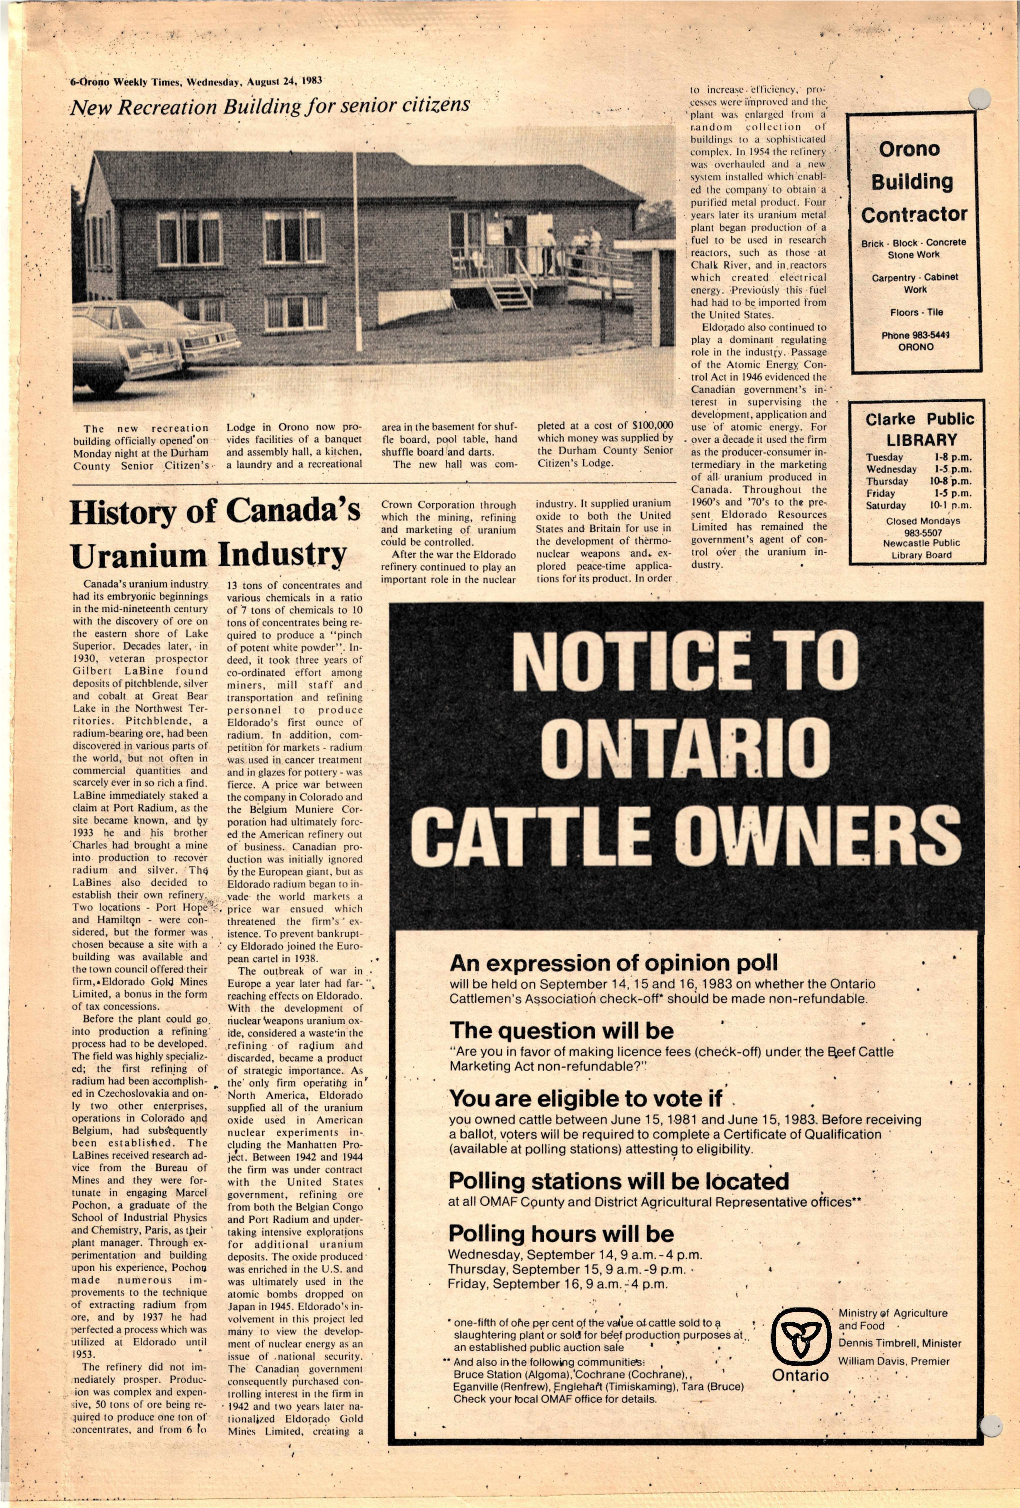 History of Canada's Uranium Industry